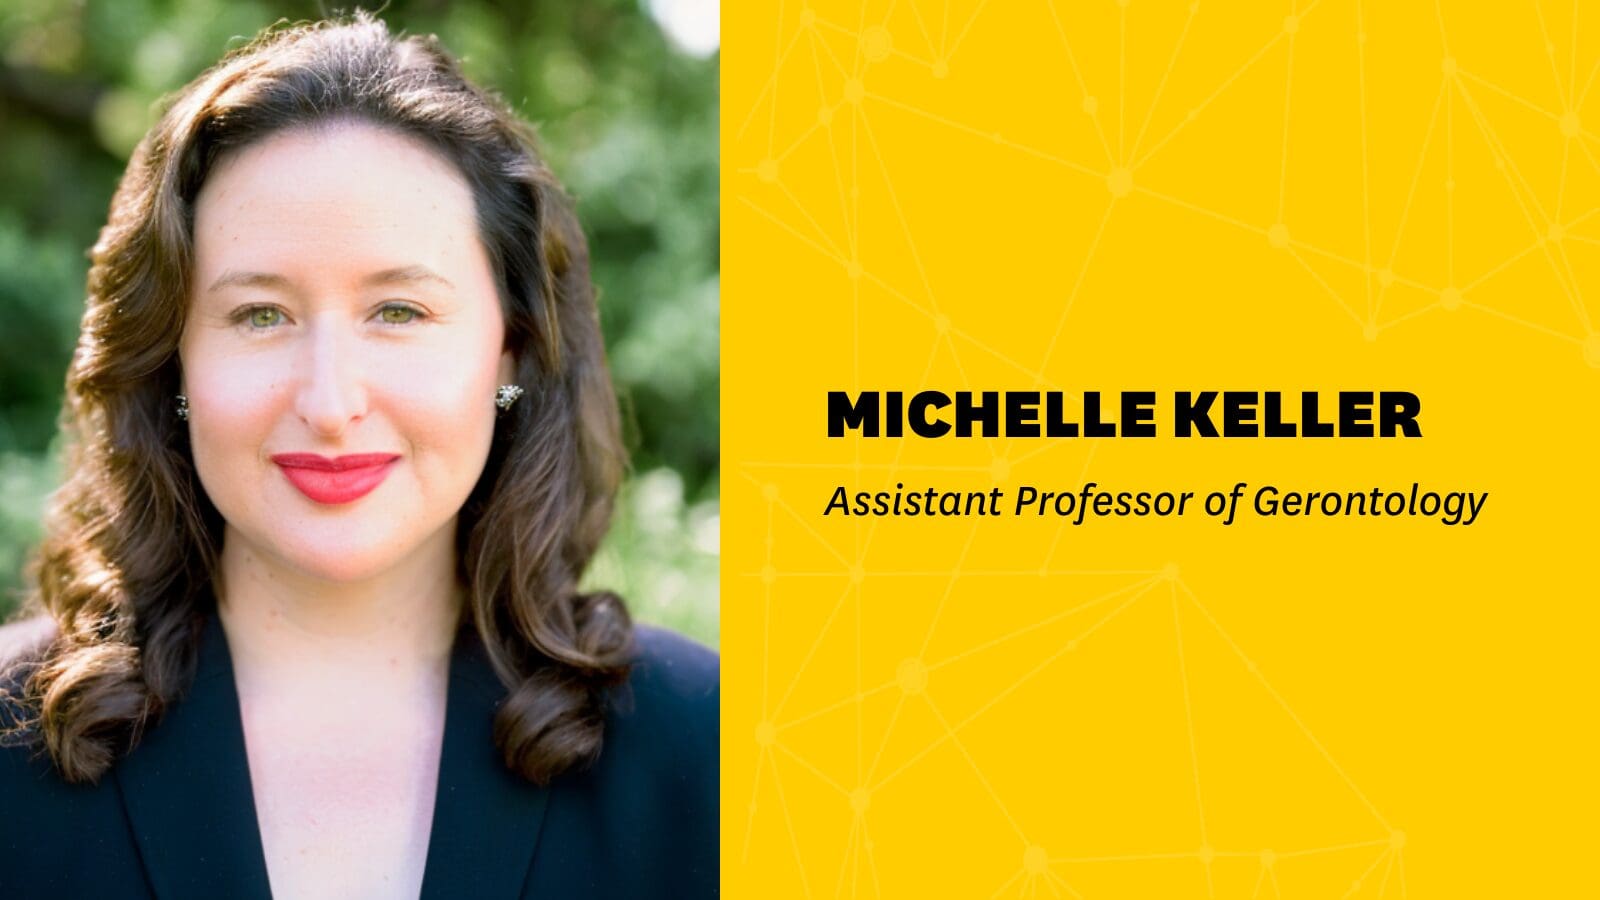 Portrait of Michelle Keller with her title beside it, Assistance Professor of Gerontology